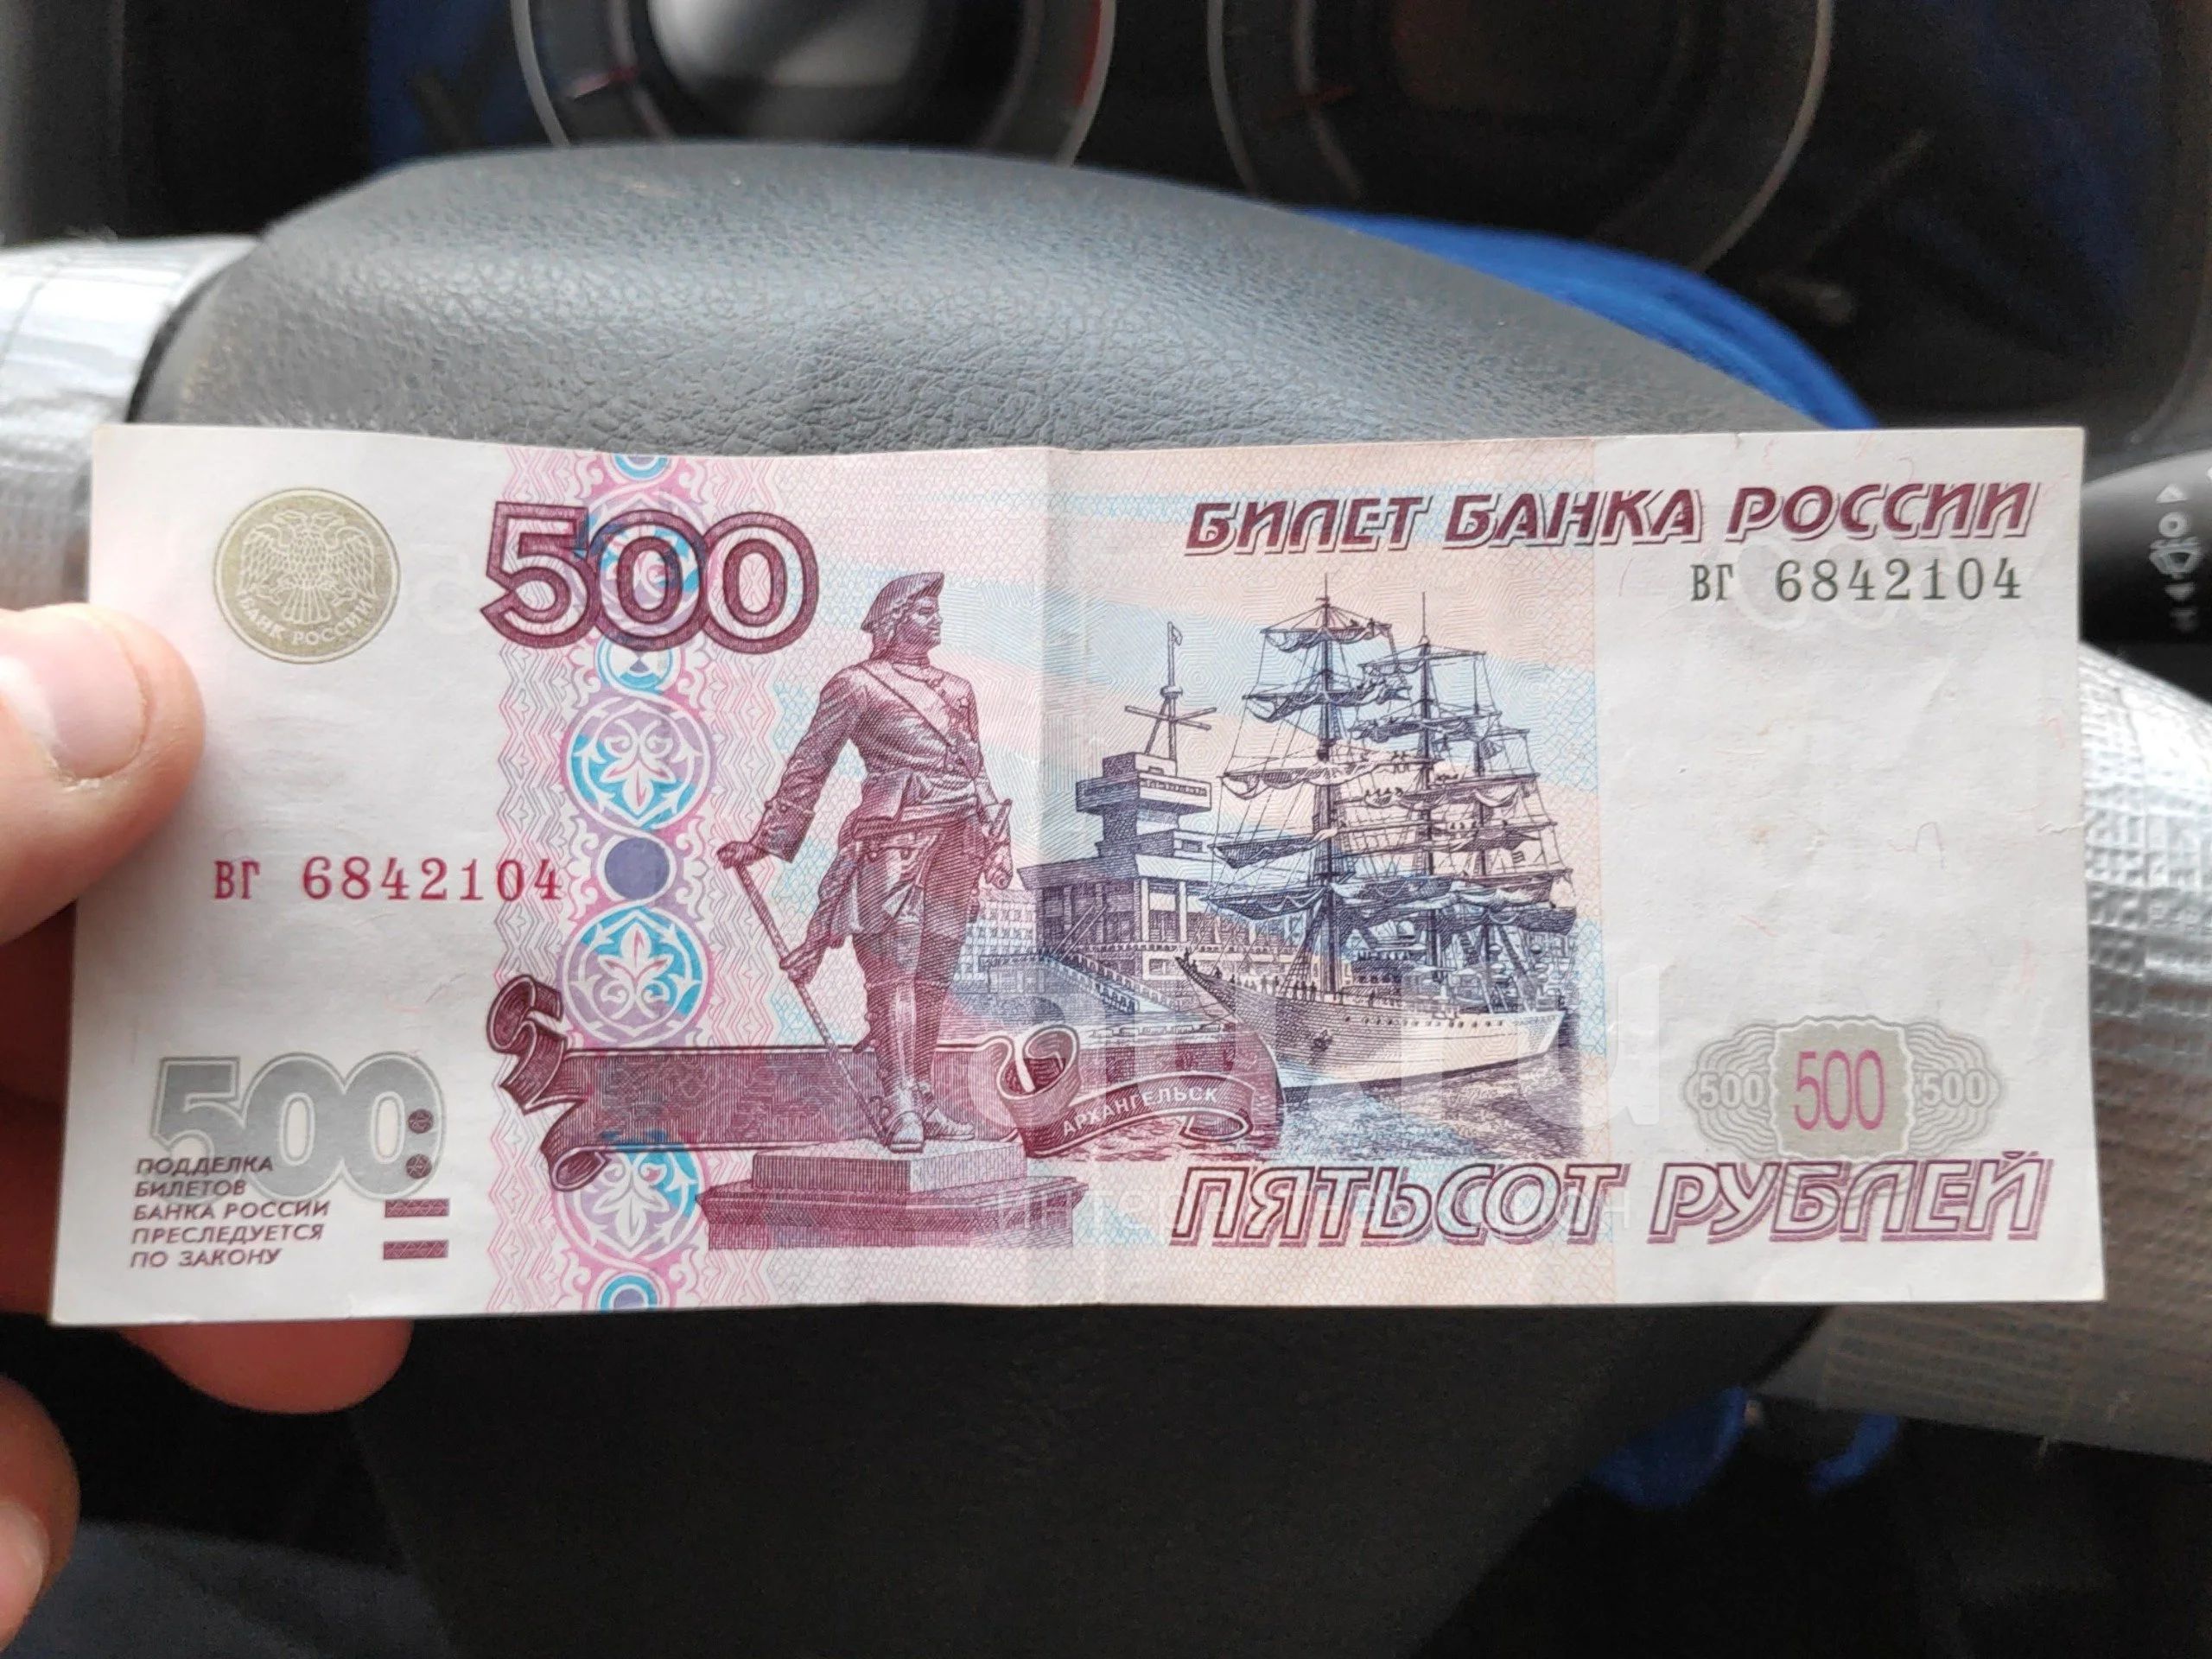 500 рублей продажа. 500 Рублей. Купюра 500 рублей. 500 Рублей фото. Новая купюра 500 рублей.